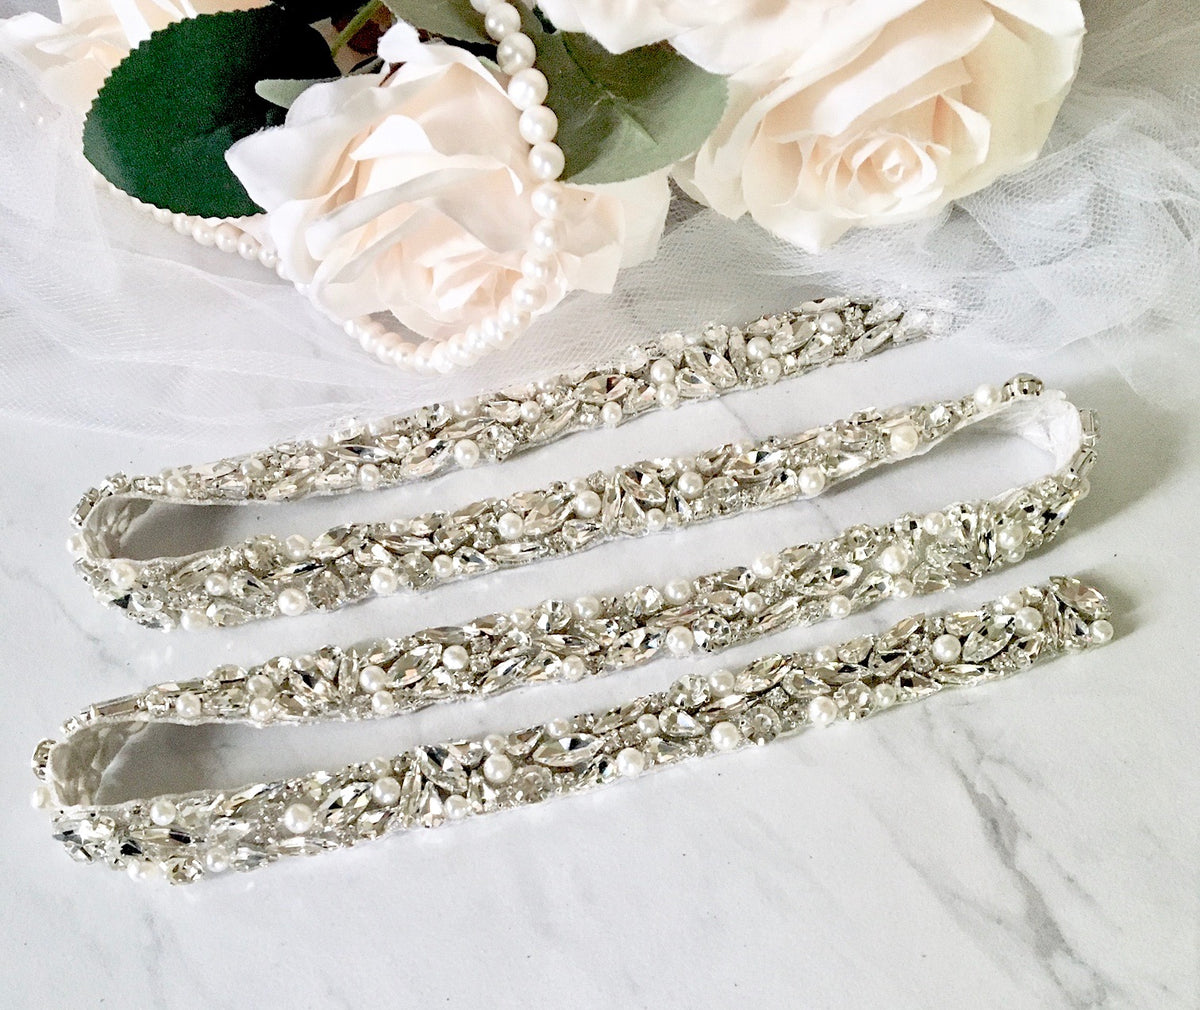 Silver/Gold/Rose Gold Rhinestone Applique Crystal Applique Wedding Applique  DIY for Bridal Sash Waist Belt